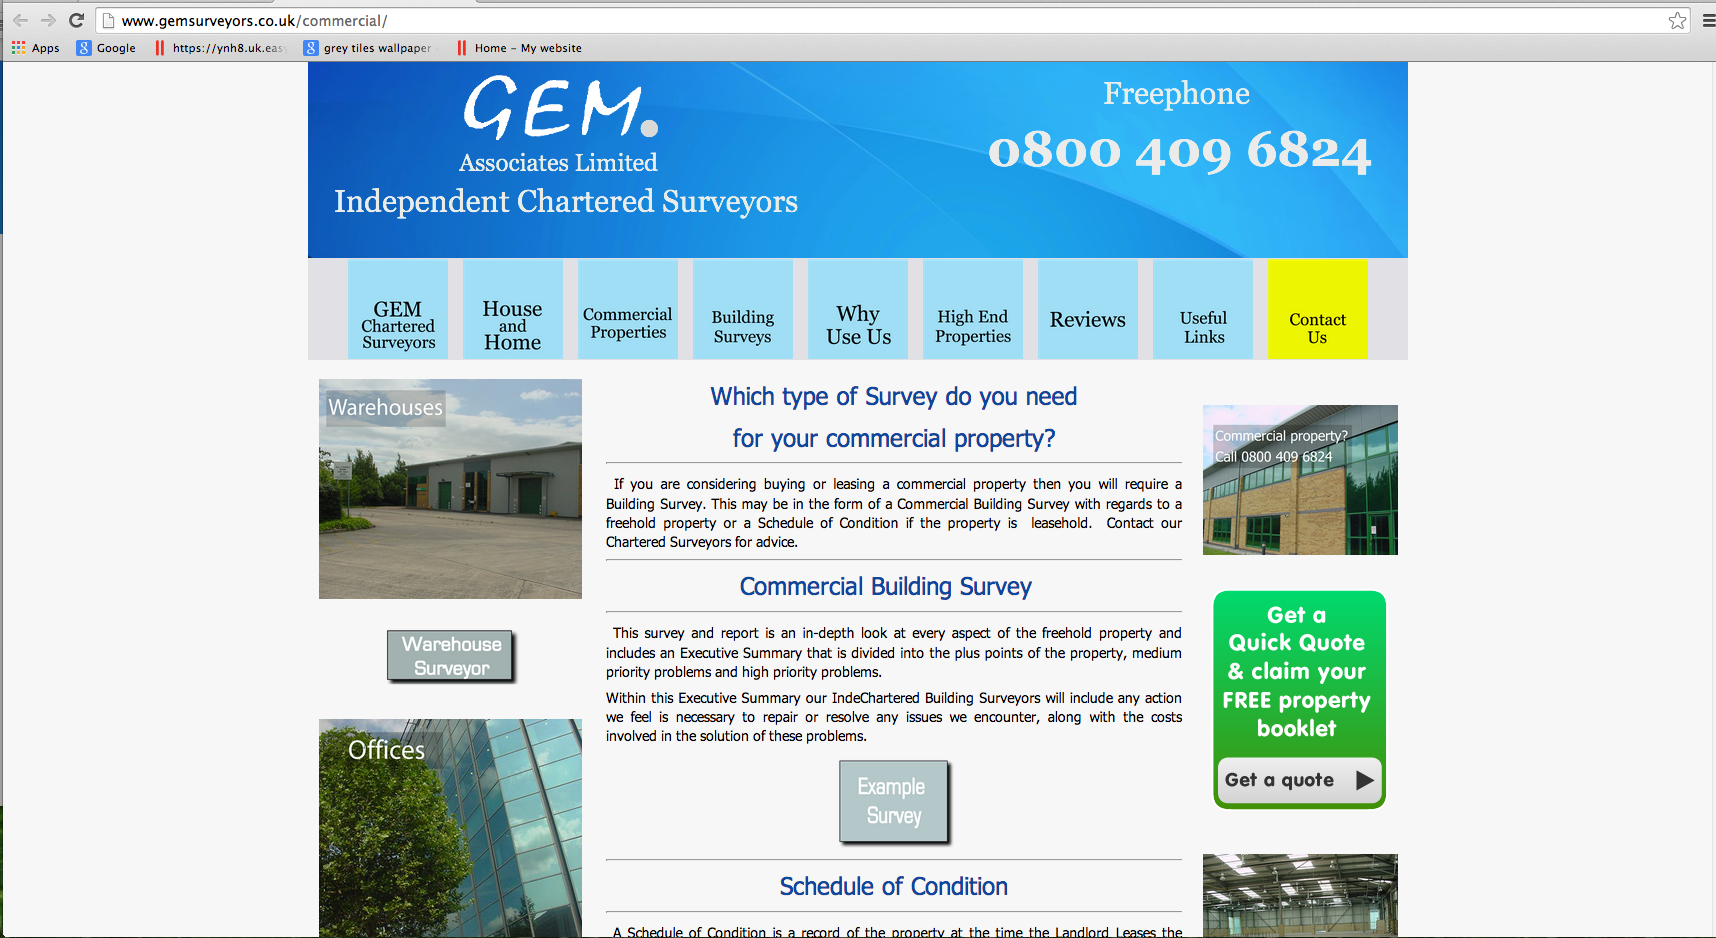 Gemsurveyors.co.uk - Commercial Property Surveys